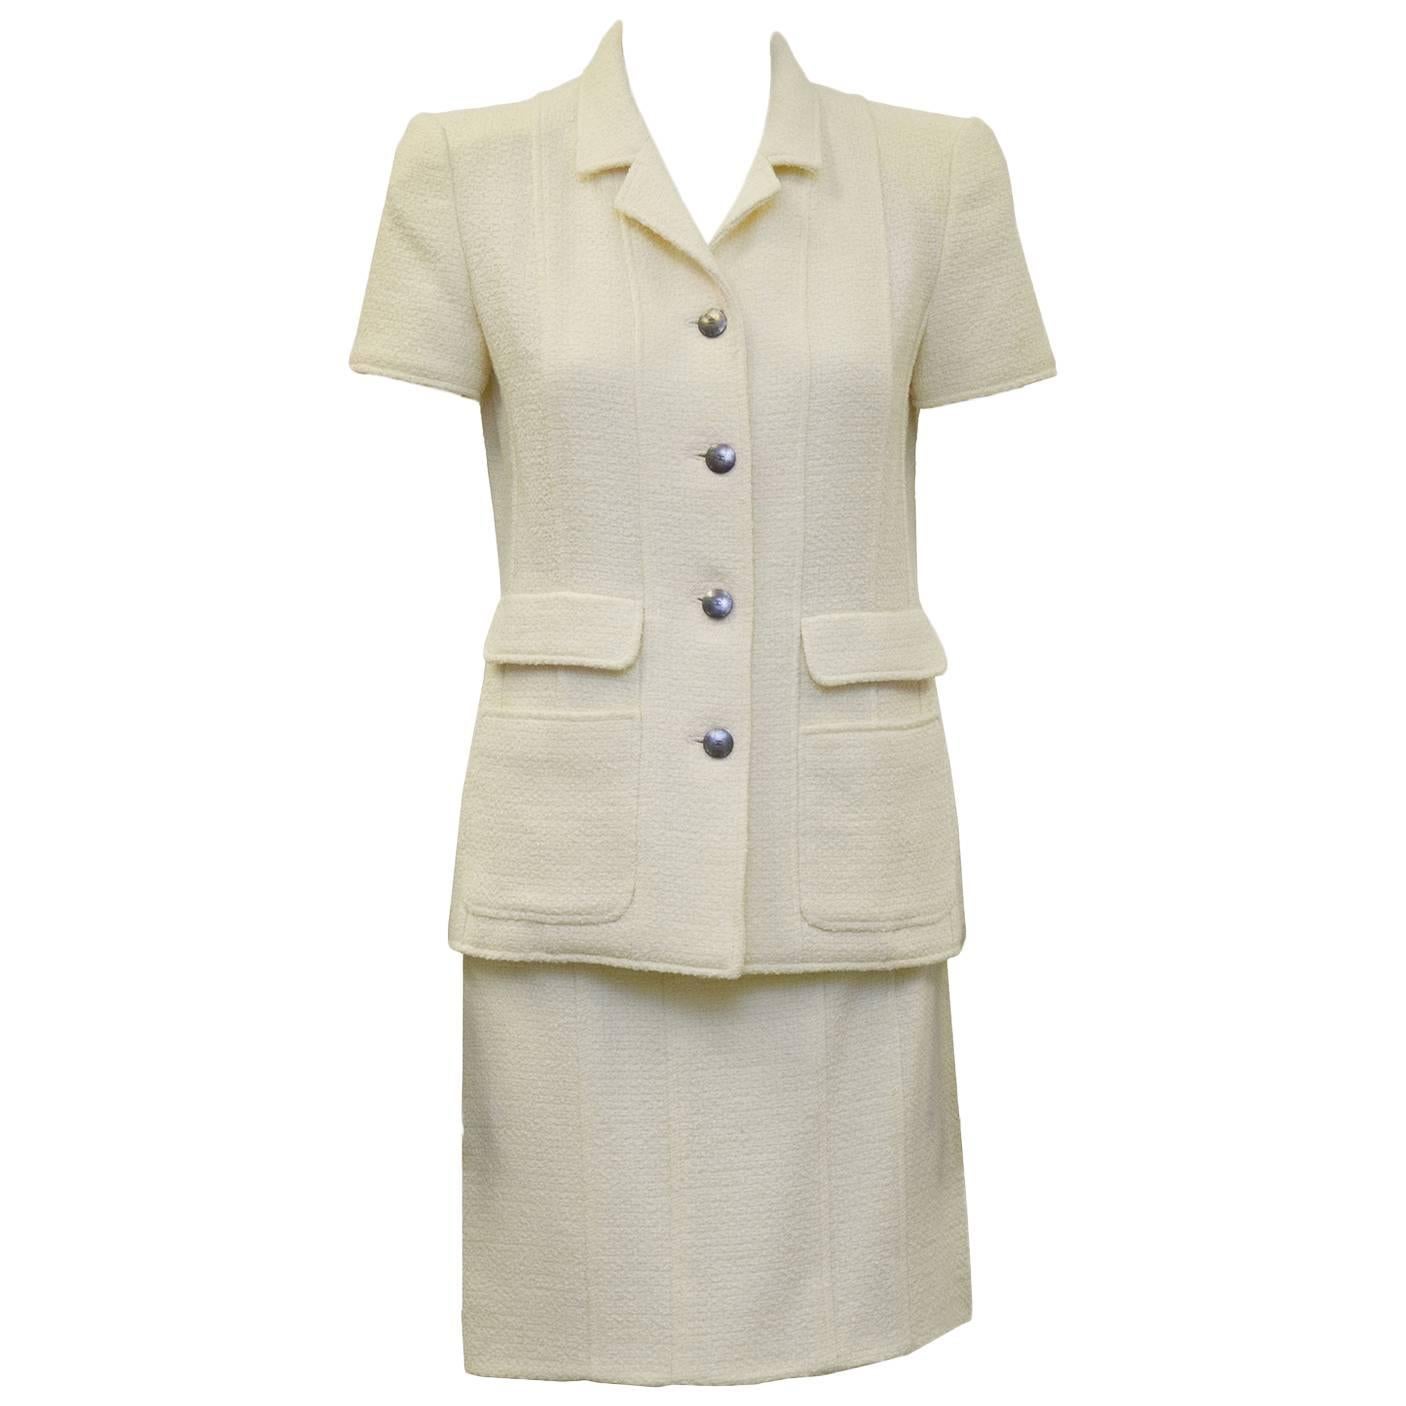 1998 Spring Chanel Cream Short Sleeve Suit